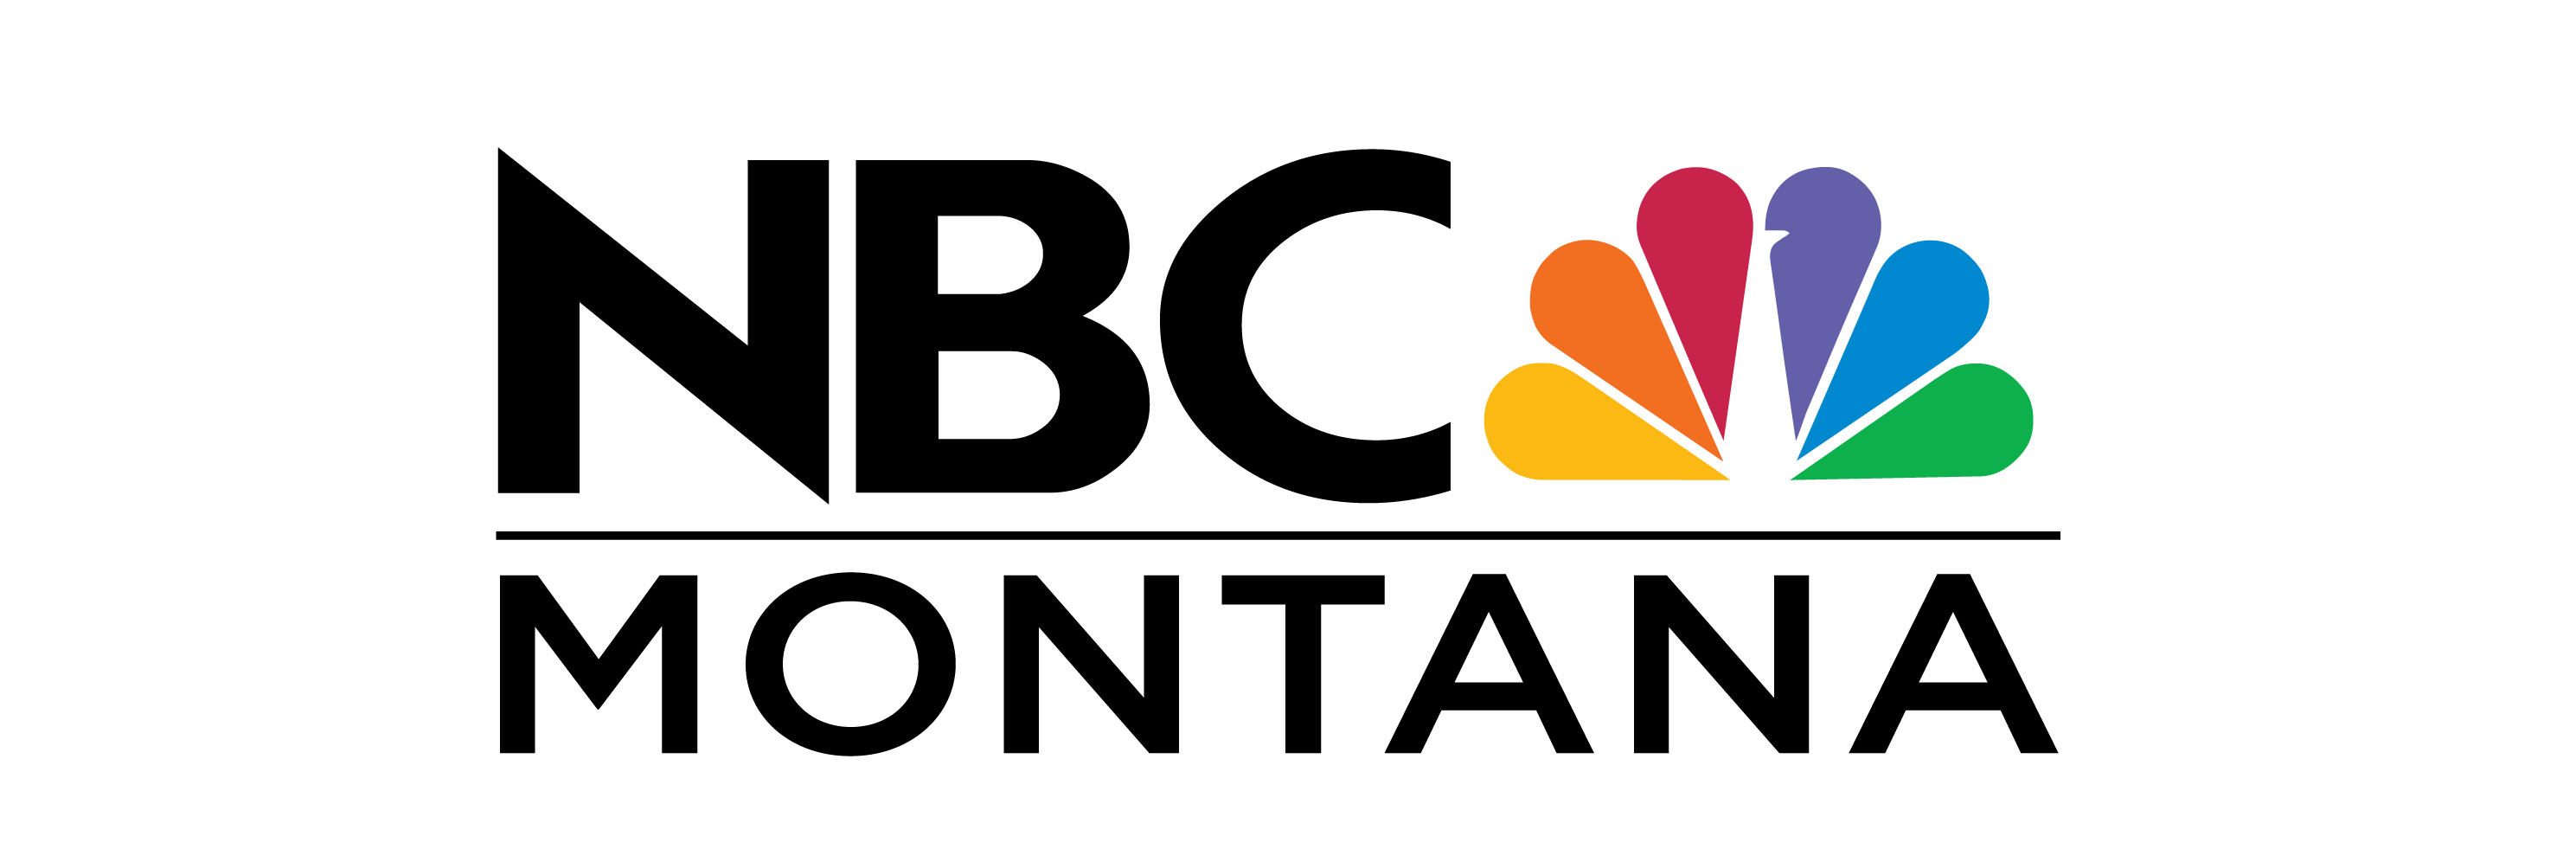 NBC Montana Logo